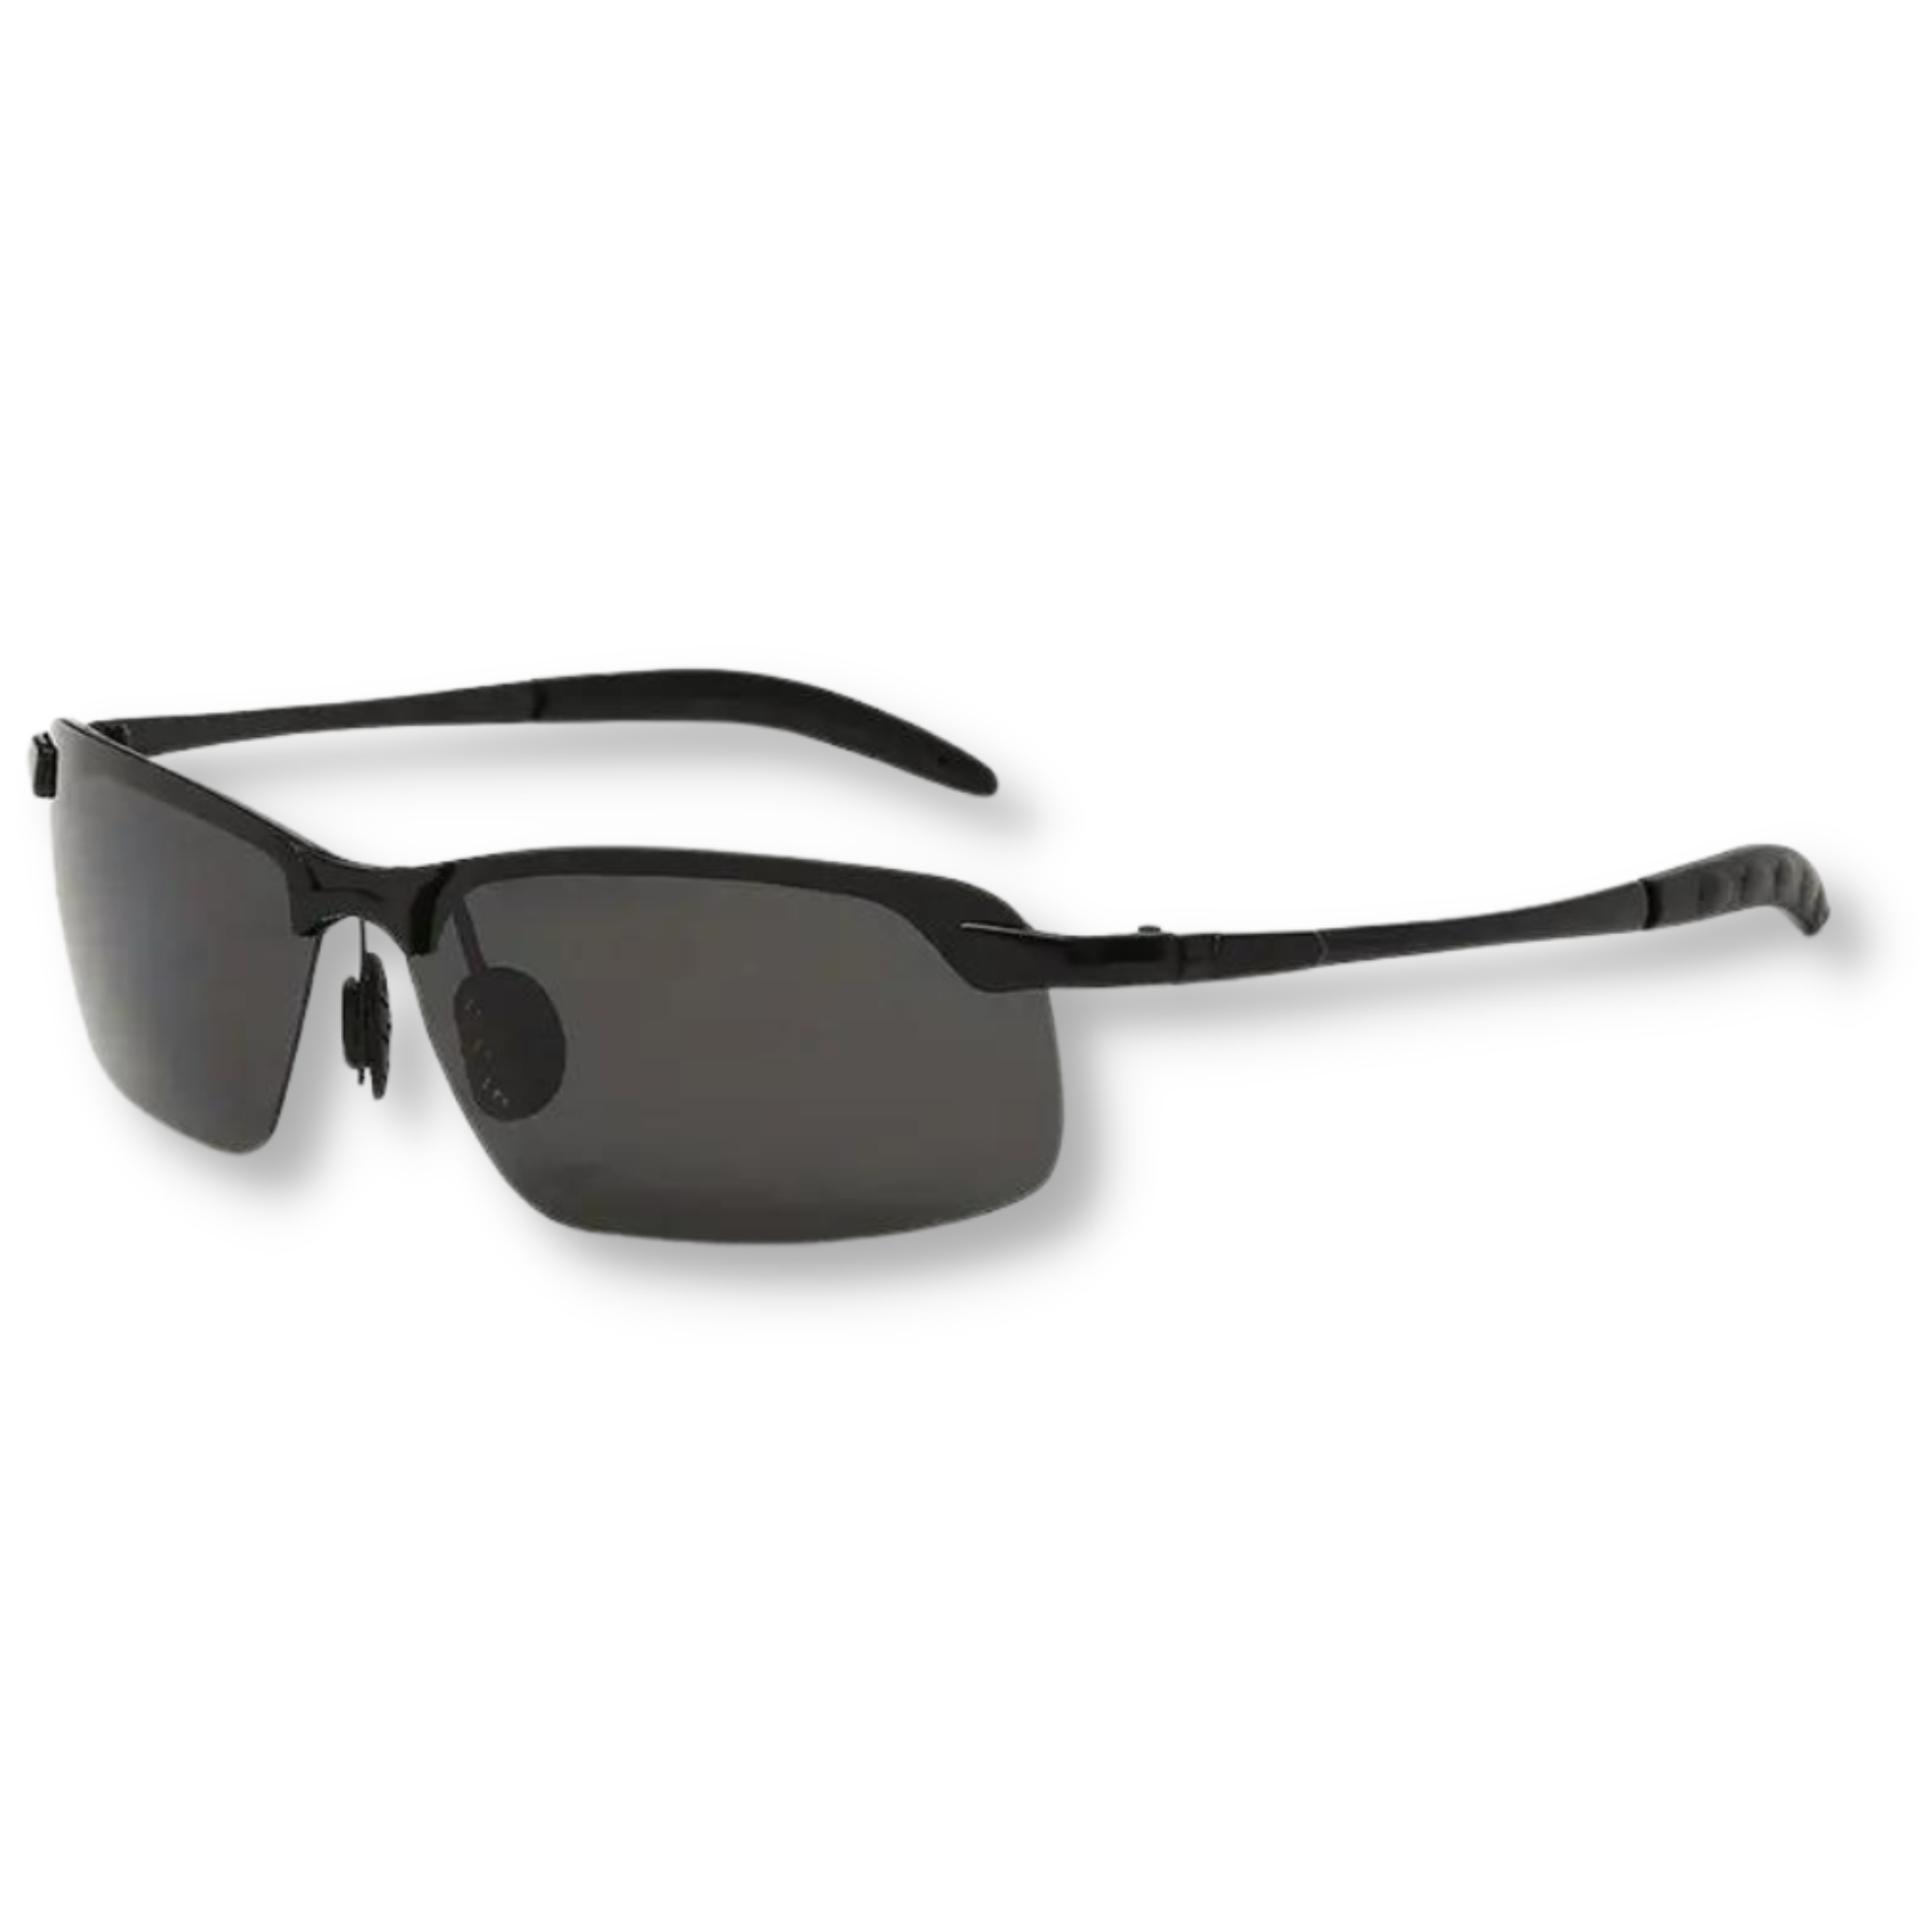 Photochromic Unisex Sunglasses & Case